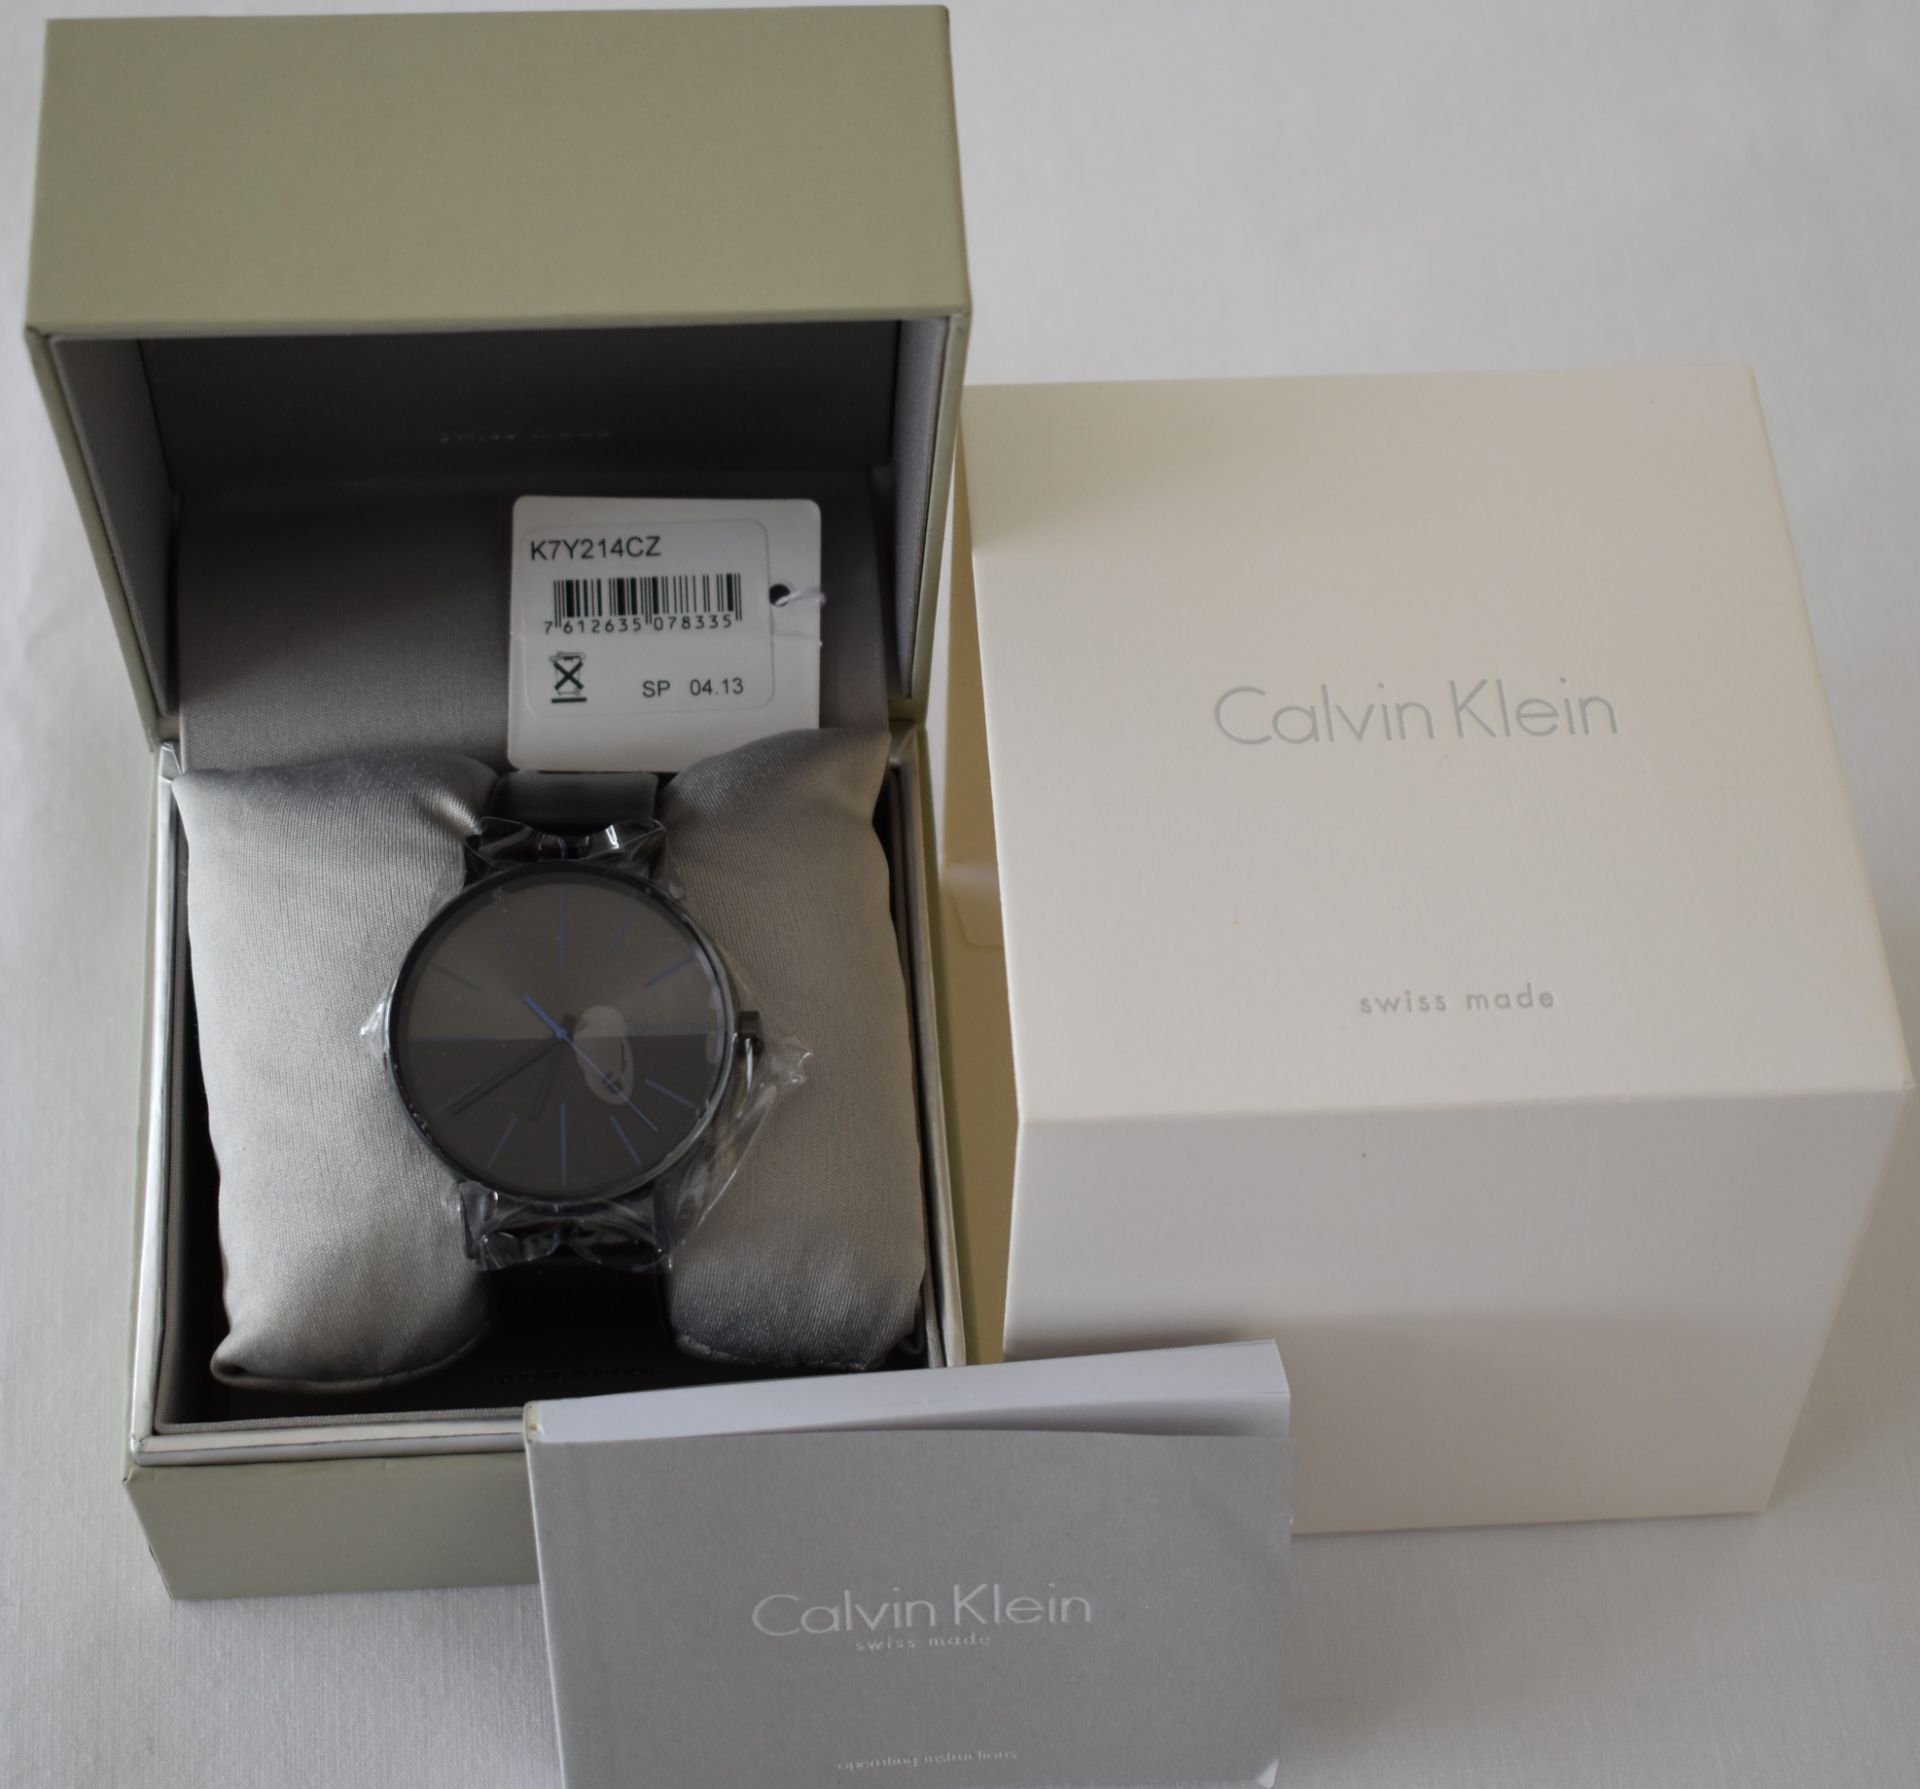 Calvin Klein K7Y214CZ Men's Watch - Image 2 of 2